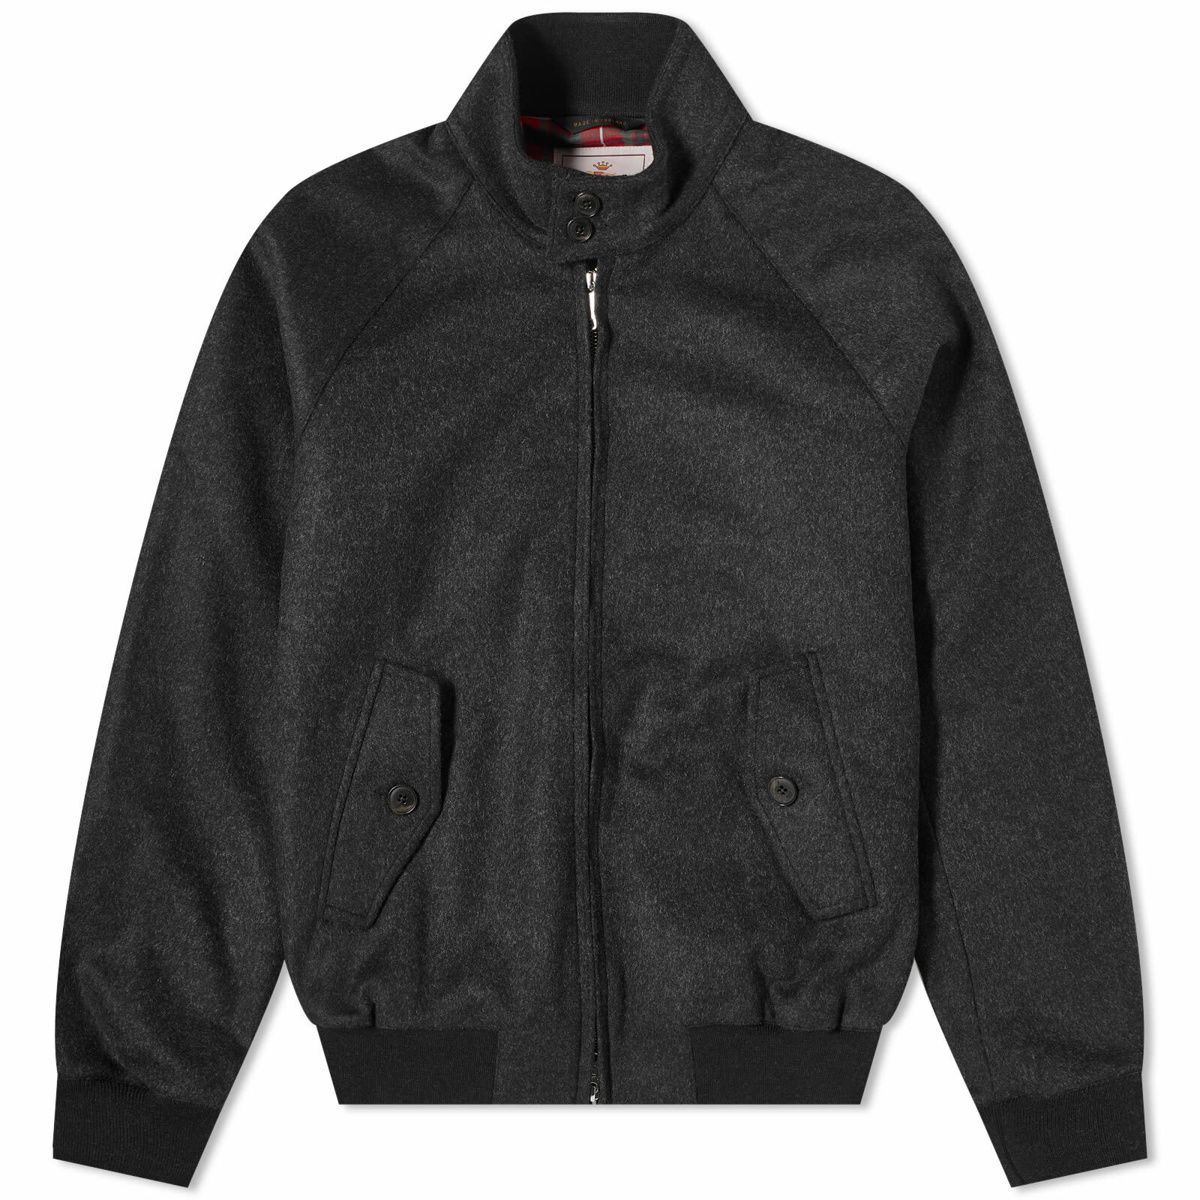 Baracuta Men's G9 Melton Wooll Harrington Jacket in Charcoal Baracuta